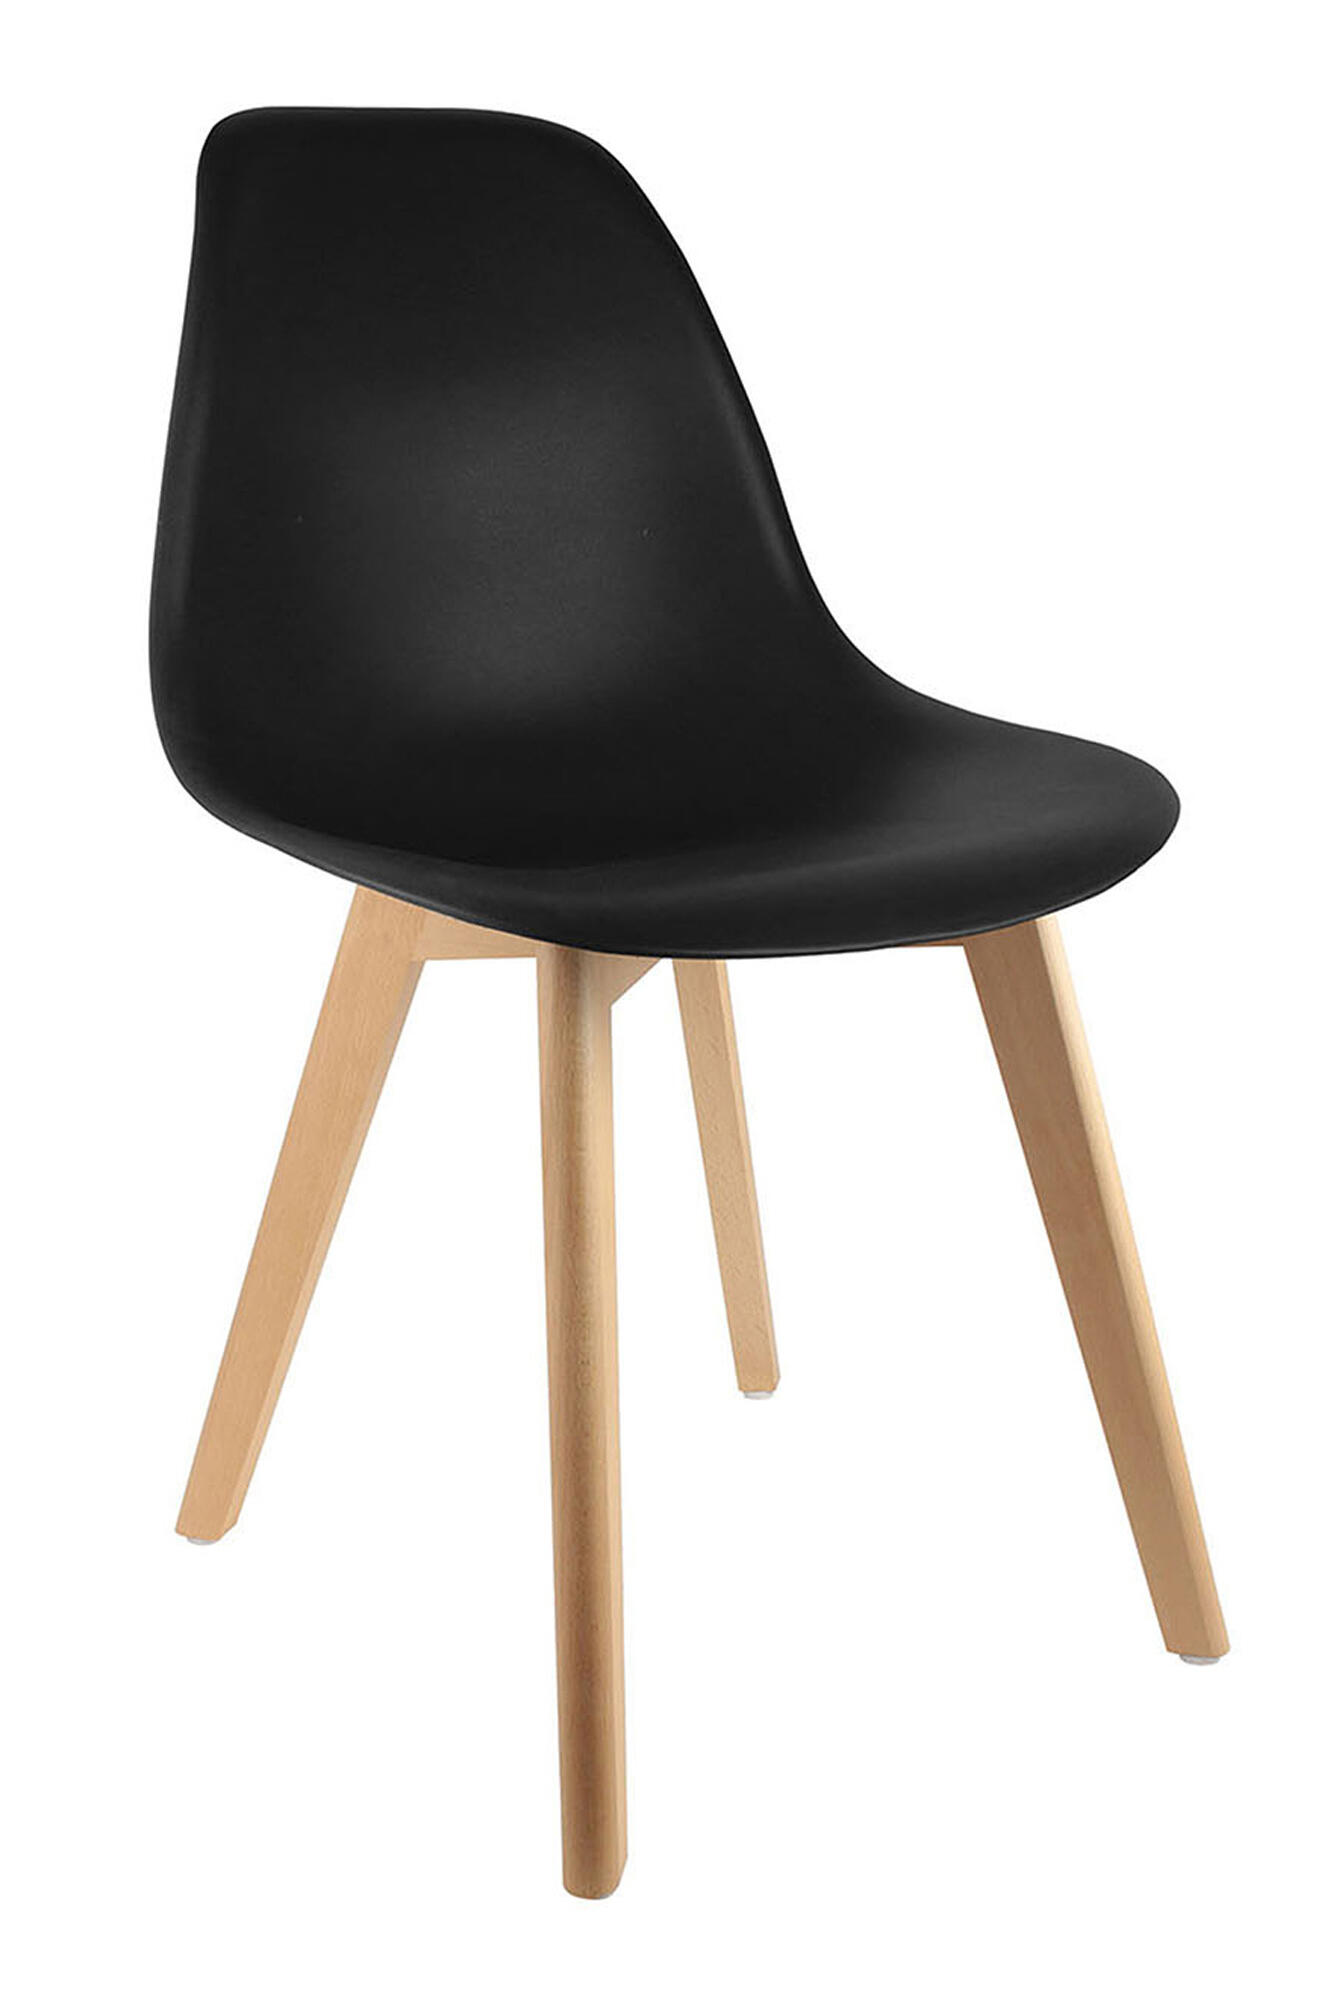 Set 4 sillas de comedor stockholm color negro